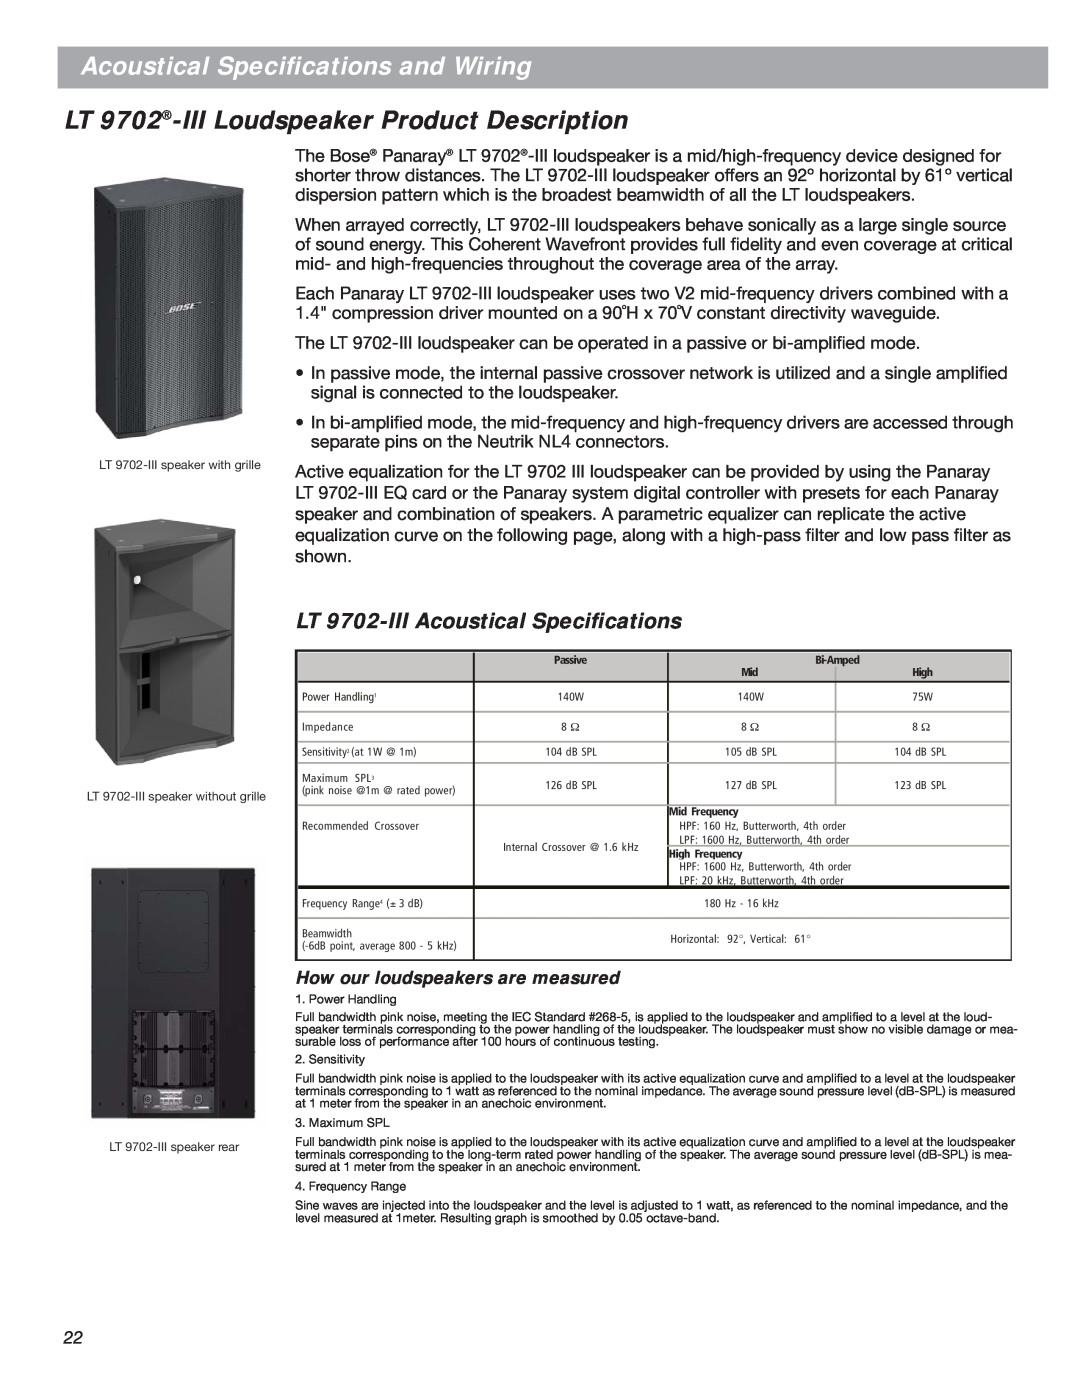 Bose LT Series III manual LT 9702-IIILoudspeaker Product Description, LT 9702-IIIAcoustical Speciﬁcations 